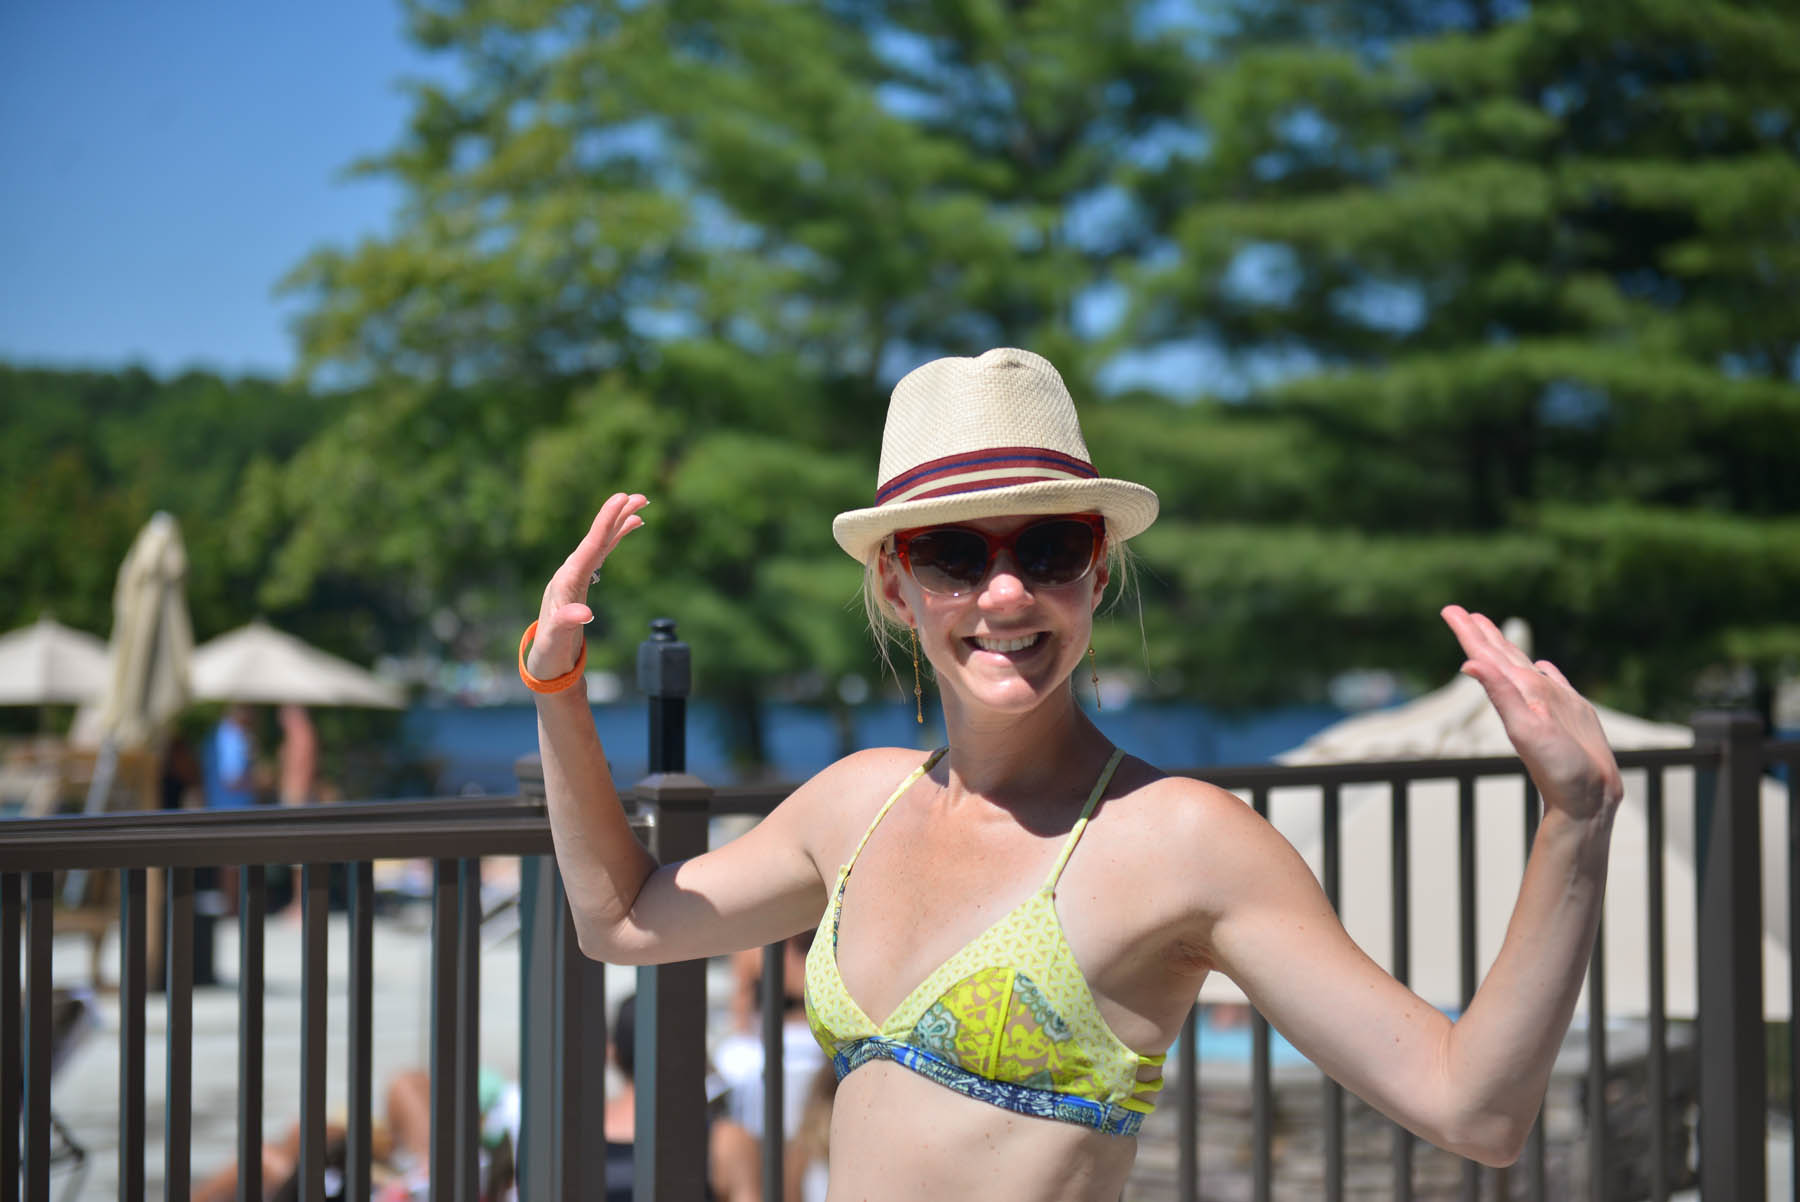 Woman posing at outdoor pool.